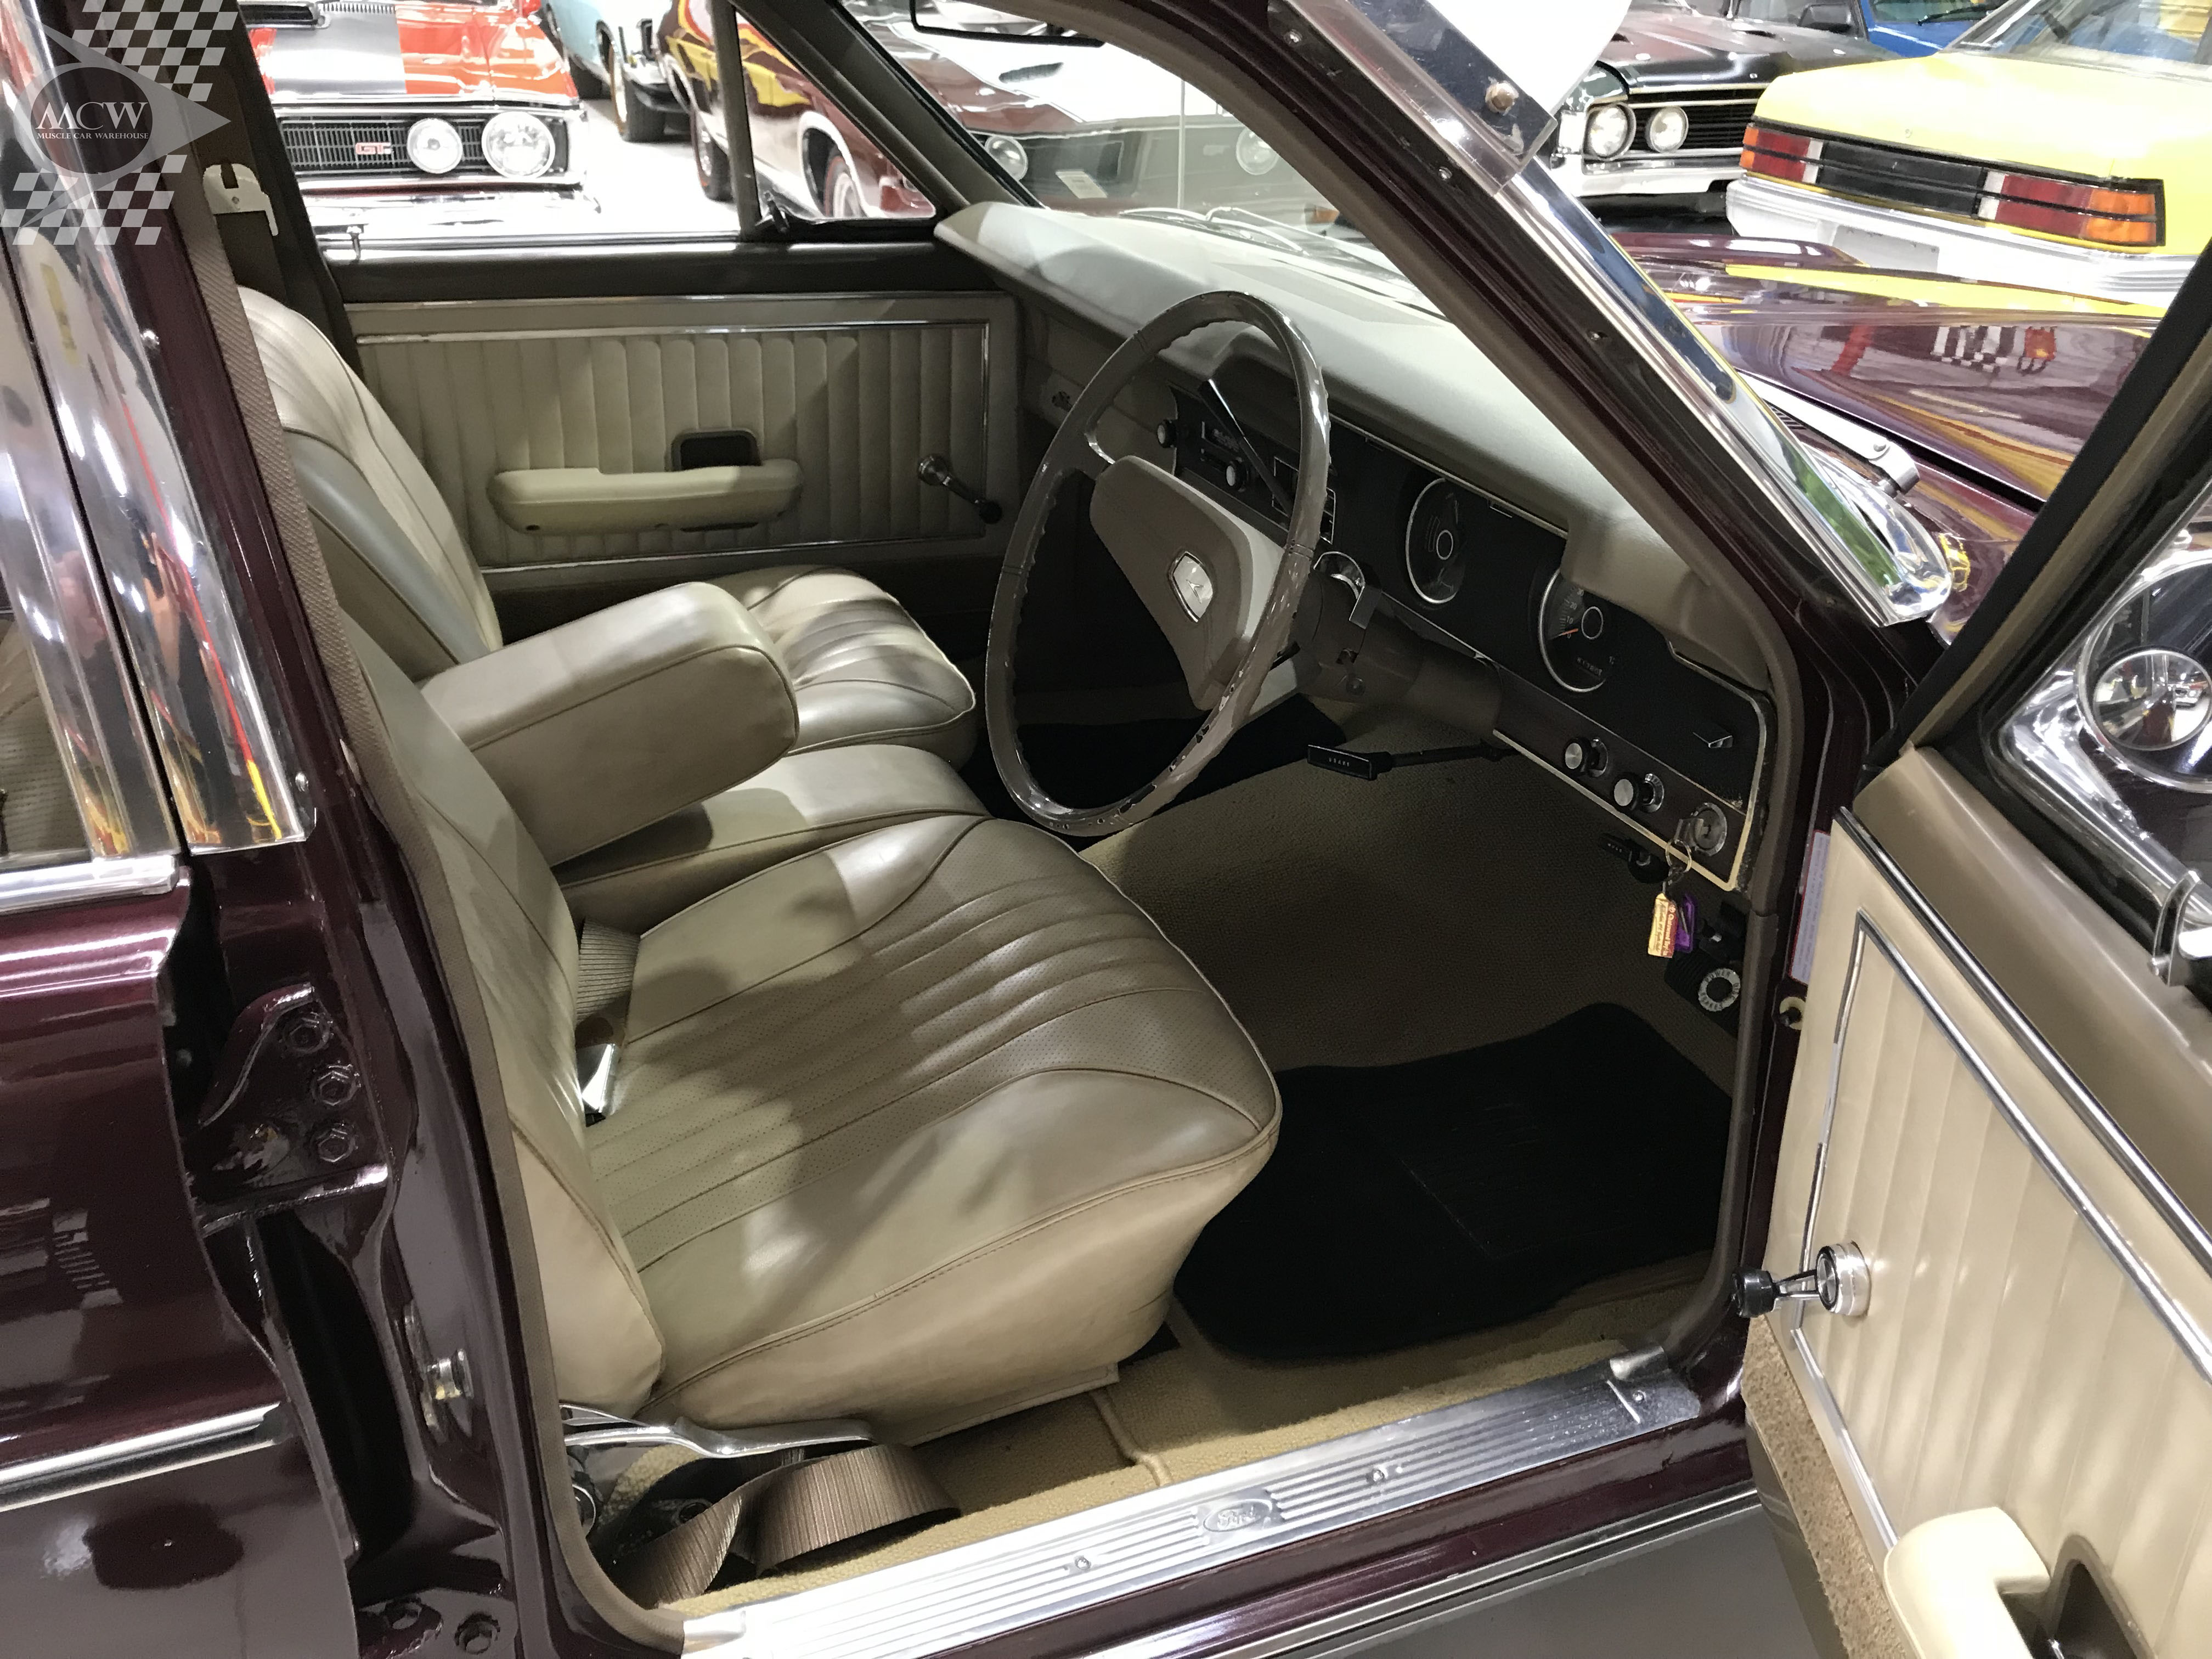 Ford Fairmont XT Wagon Interior | Muscle Car Warehouse